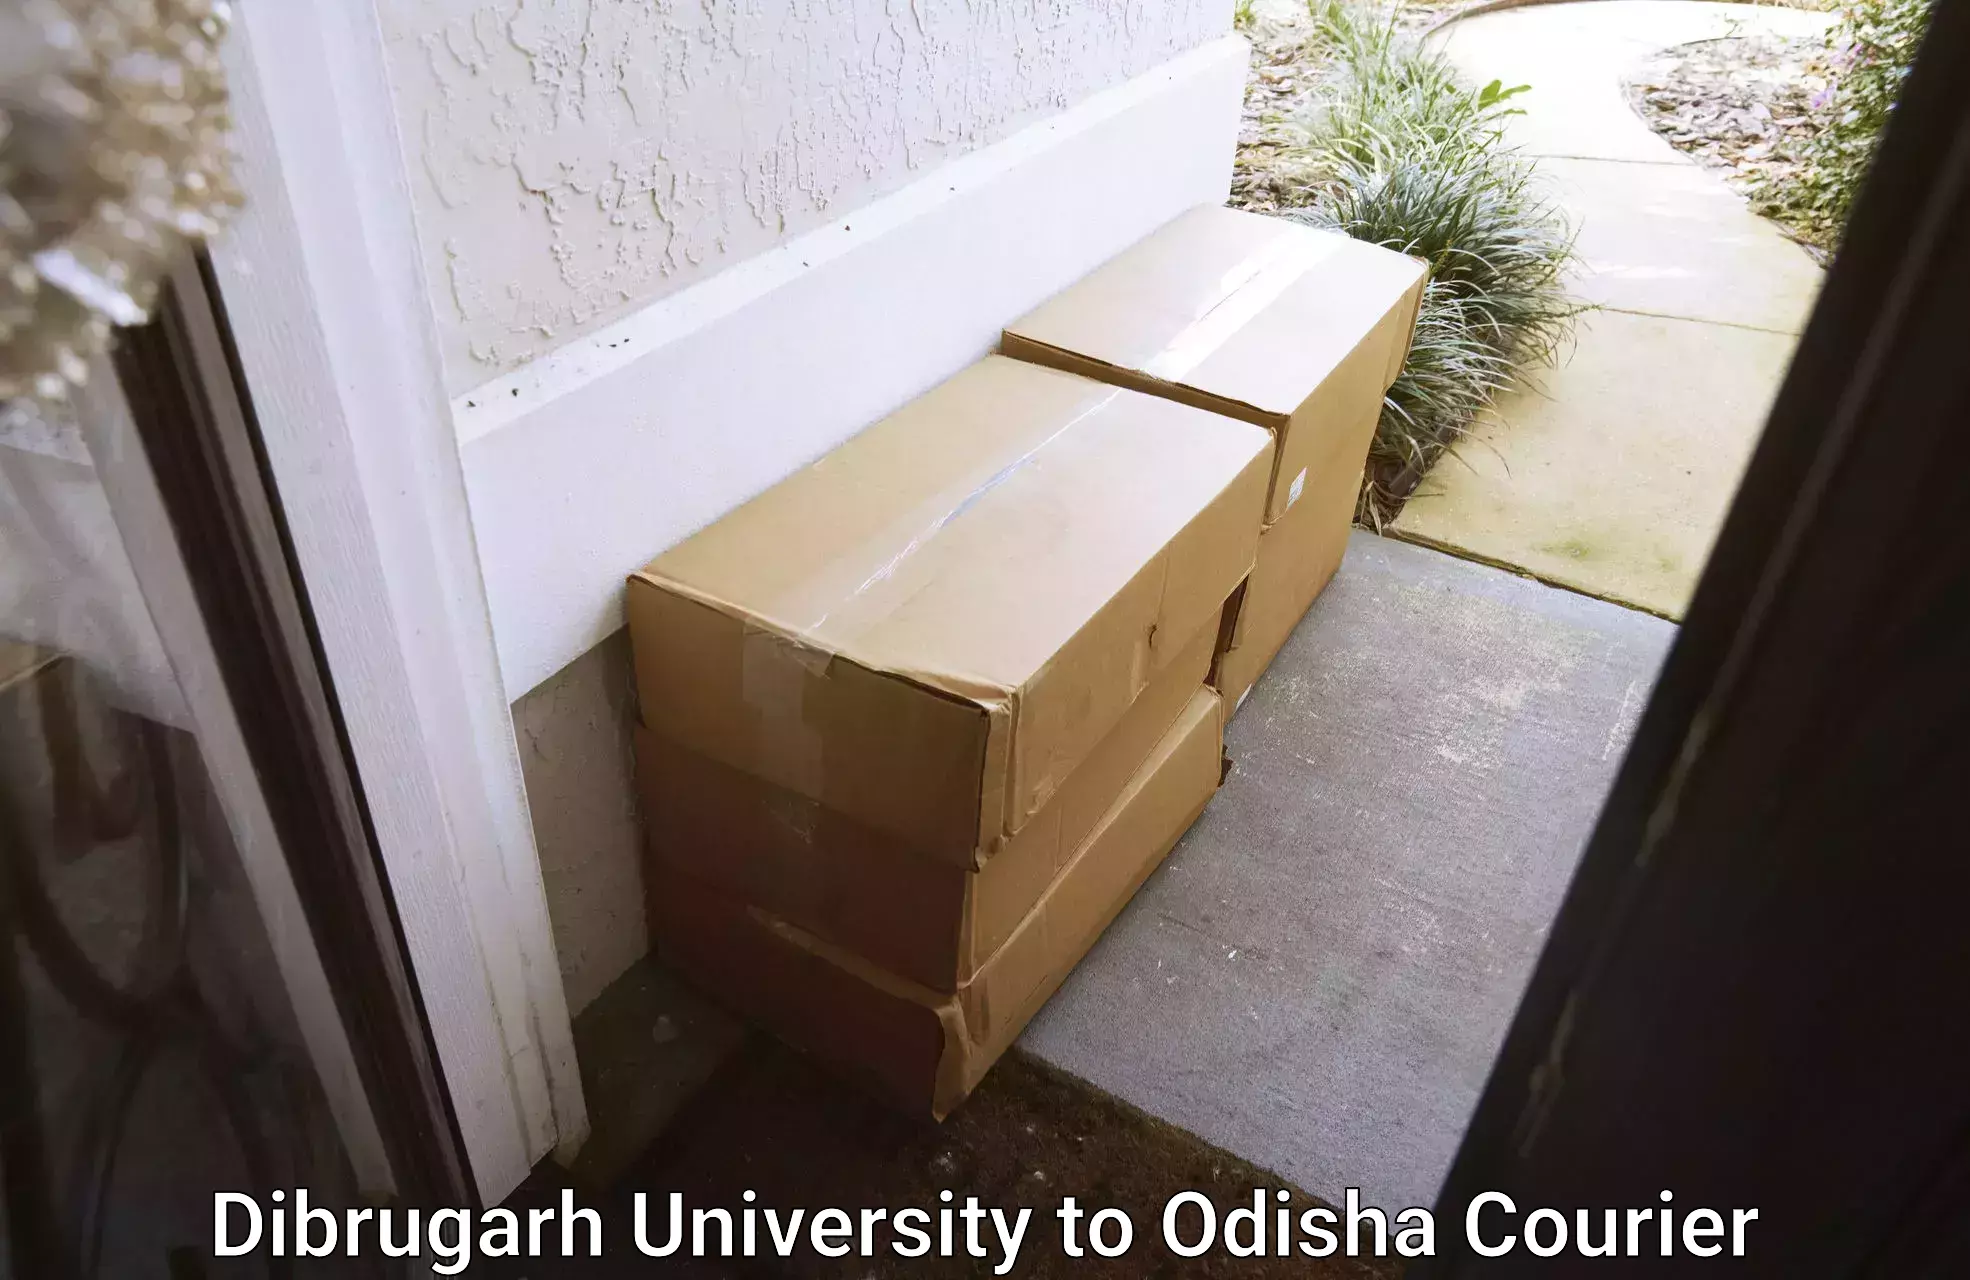 Express courier capabilities Dibrugarh University to Odisha